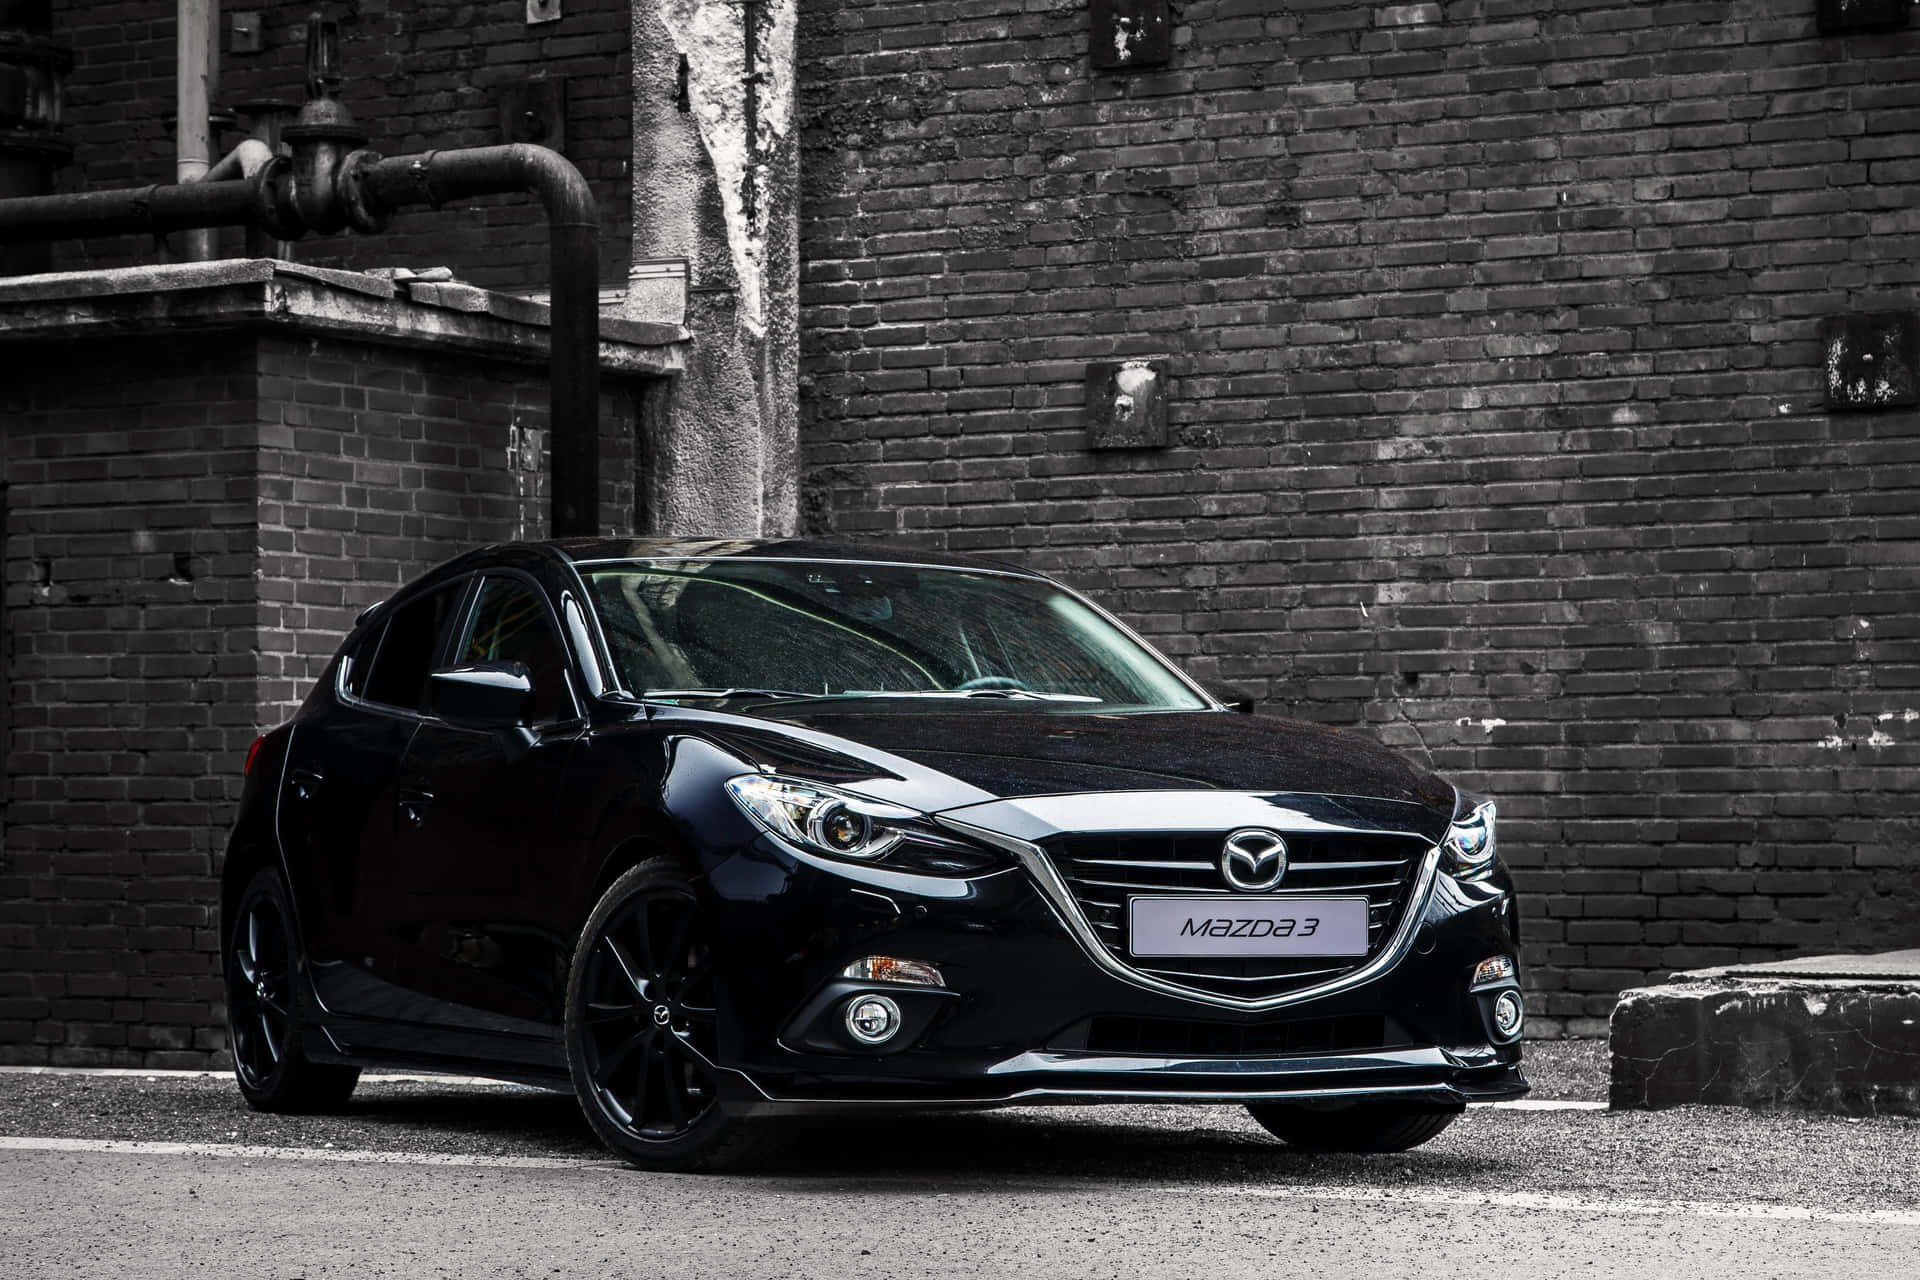 Sleek Mazda 3 Hatchback In Urban Setting Wallpaper